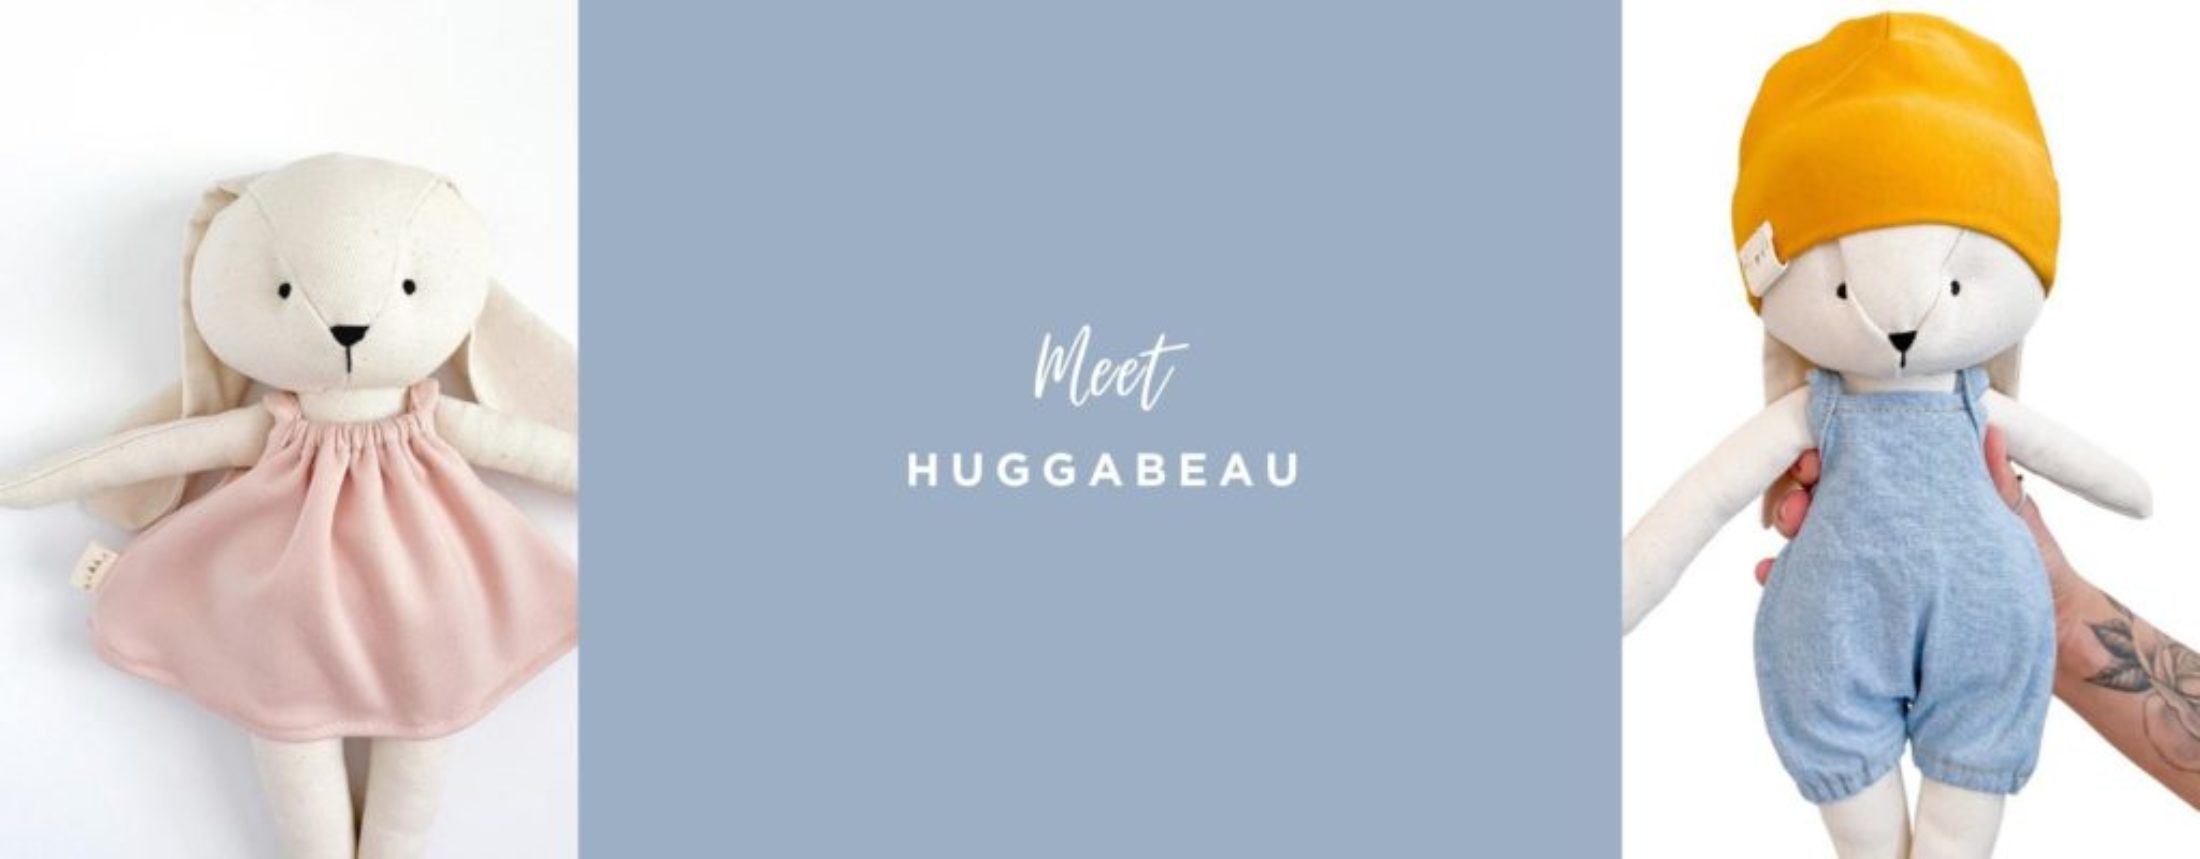 Shop Now - Meet Huggabeau